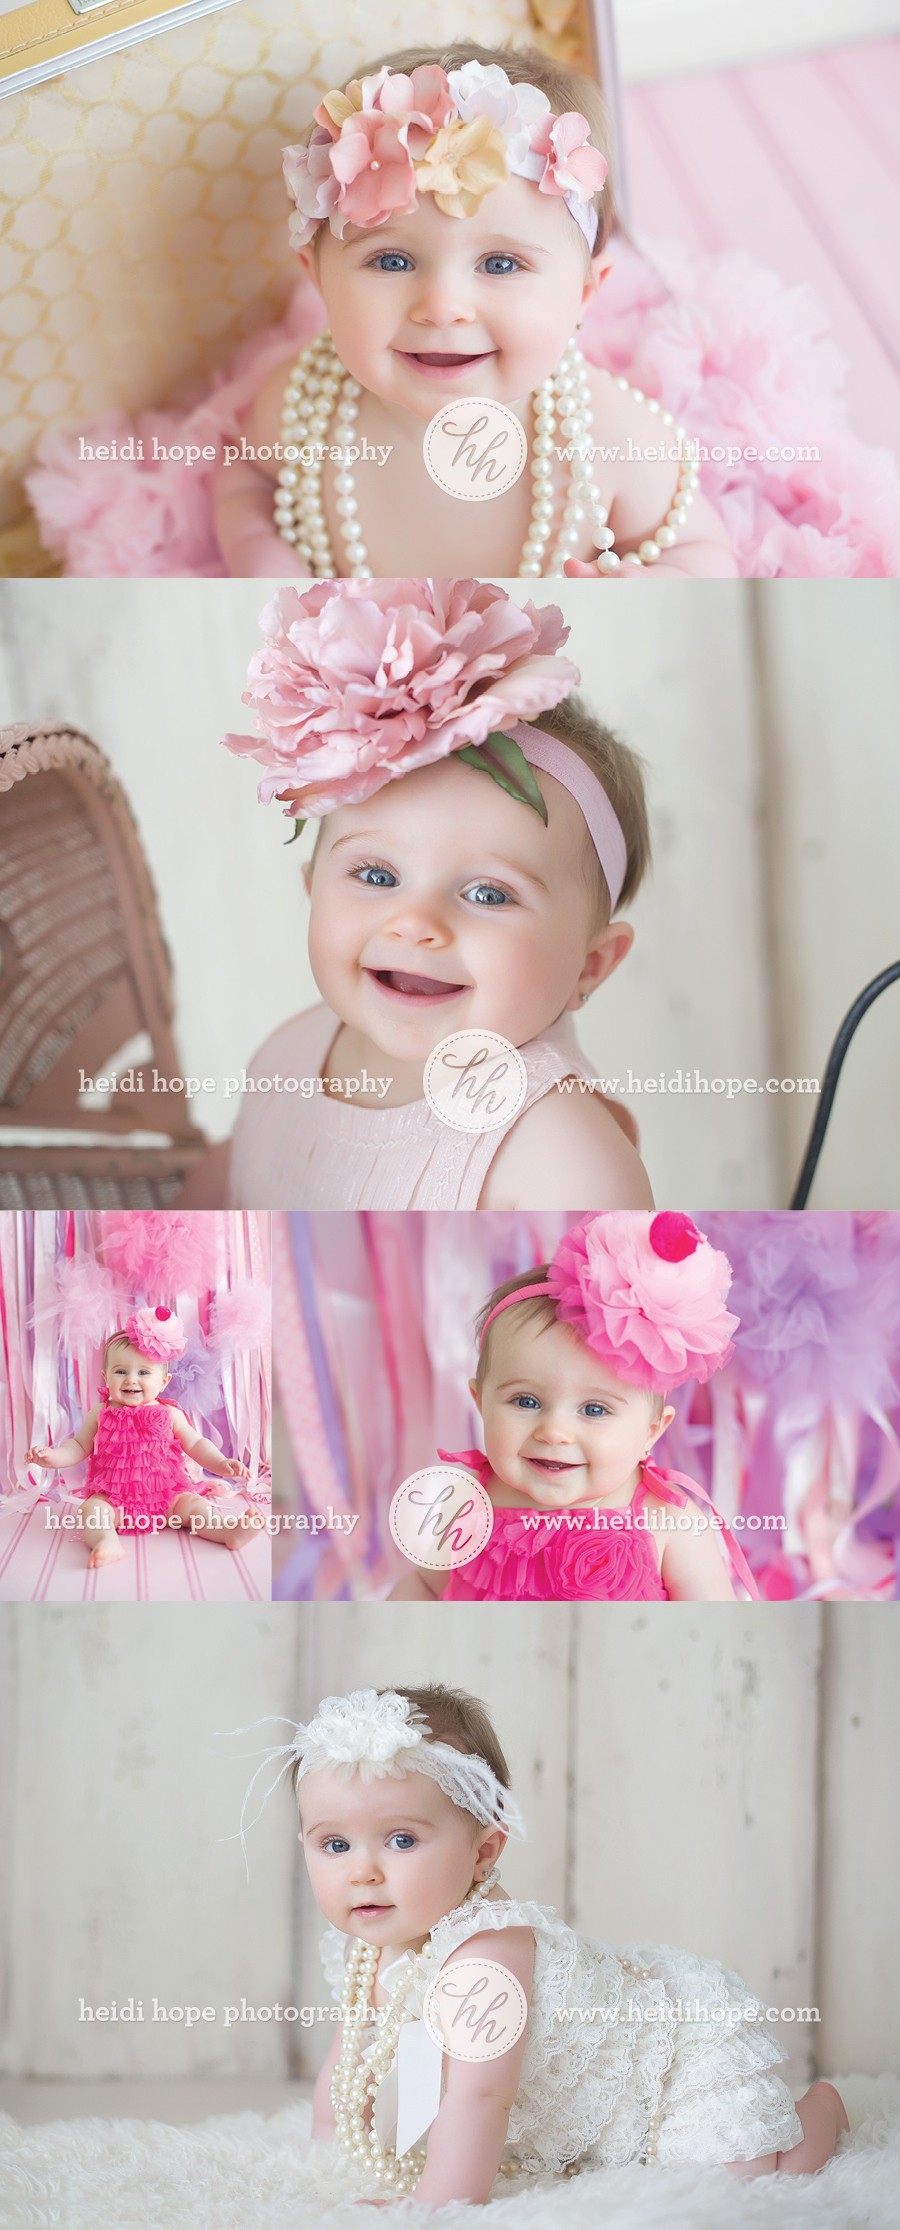 M’s 8 Month Portraits! | Rhode Island Baby Portrait Photography